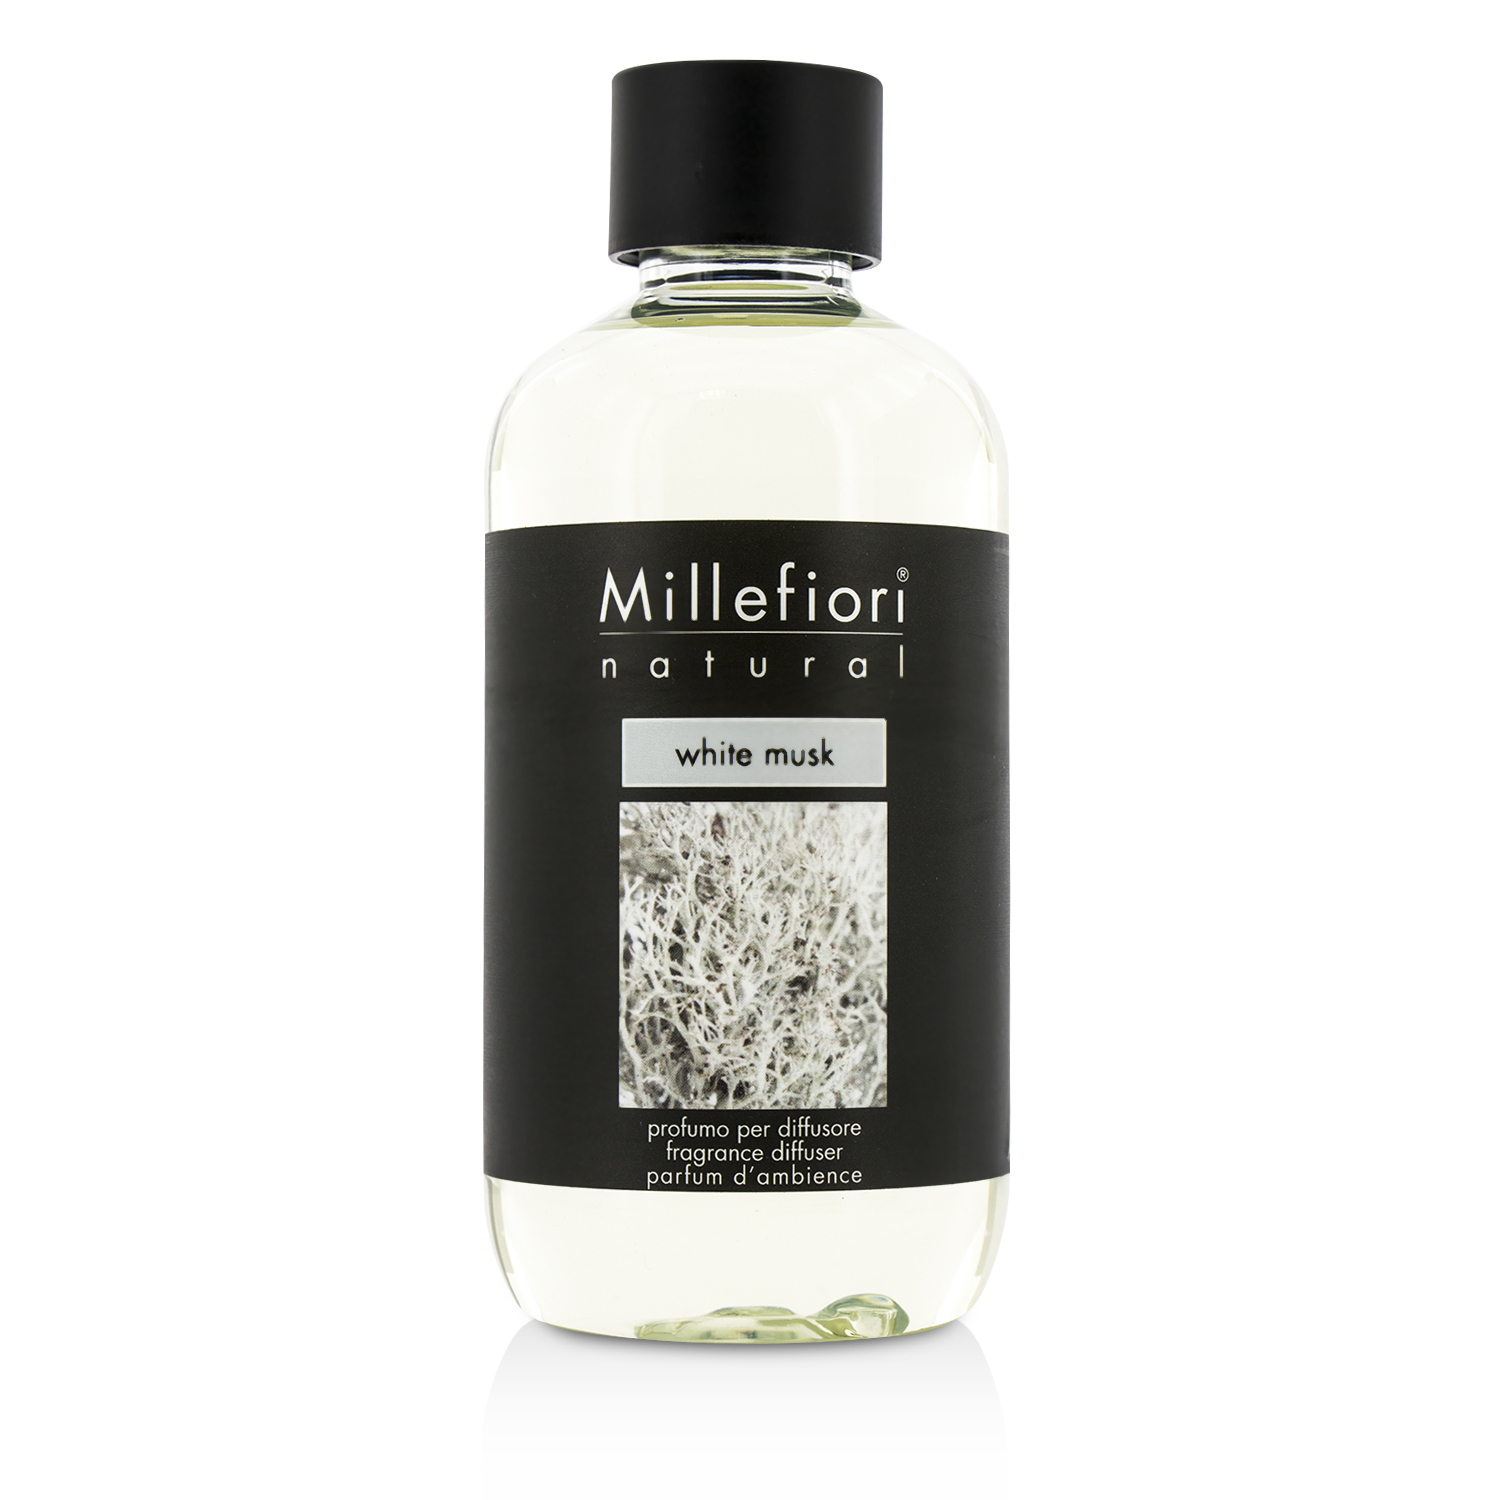 Natural Fragrance Diffuser Refill - White Musk Millefiori Image